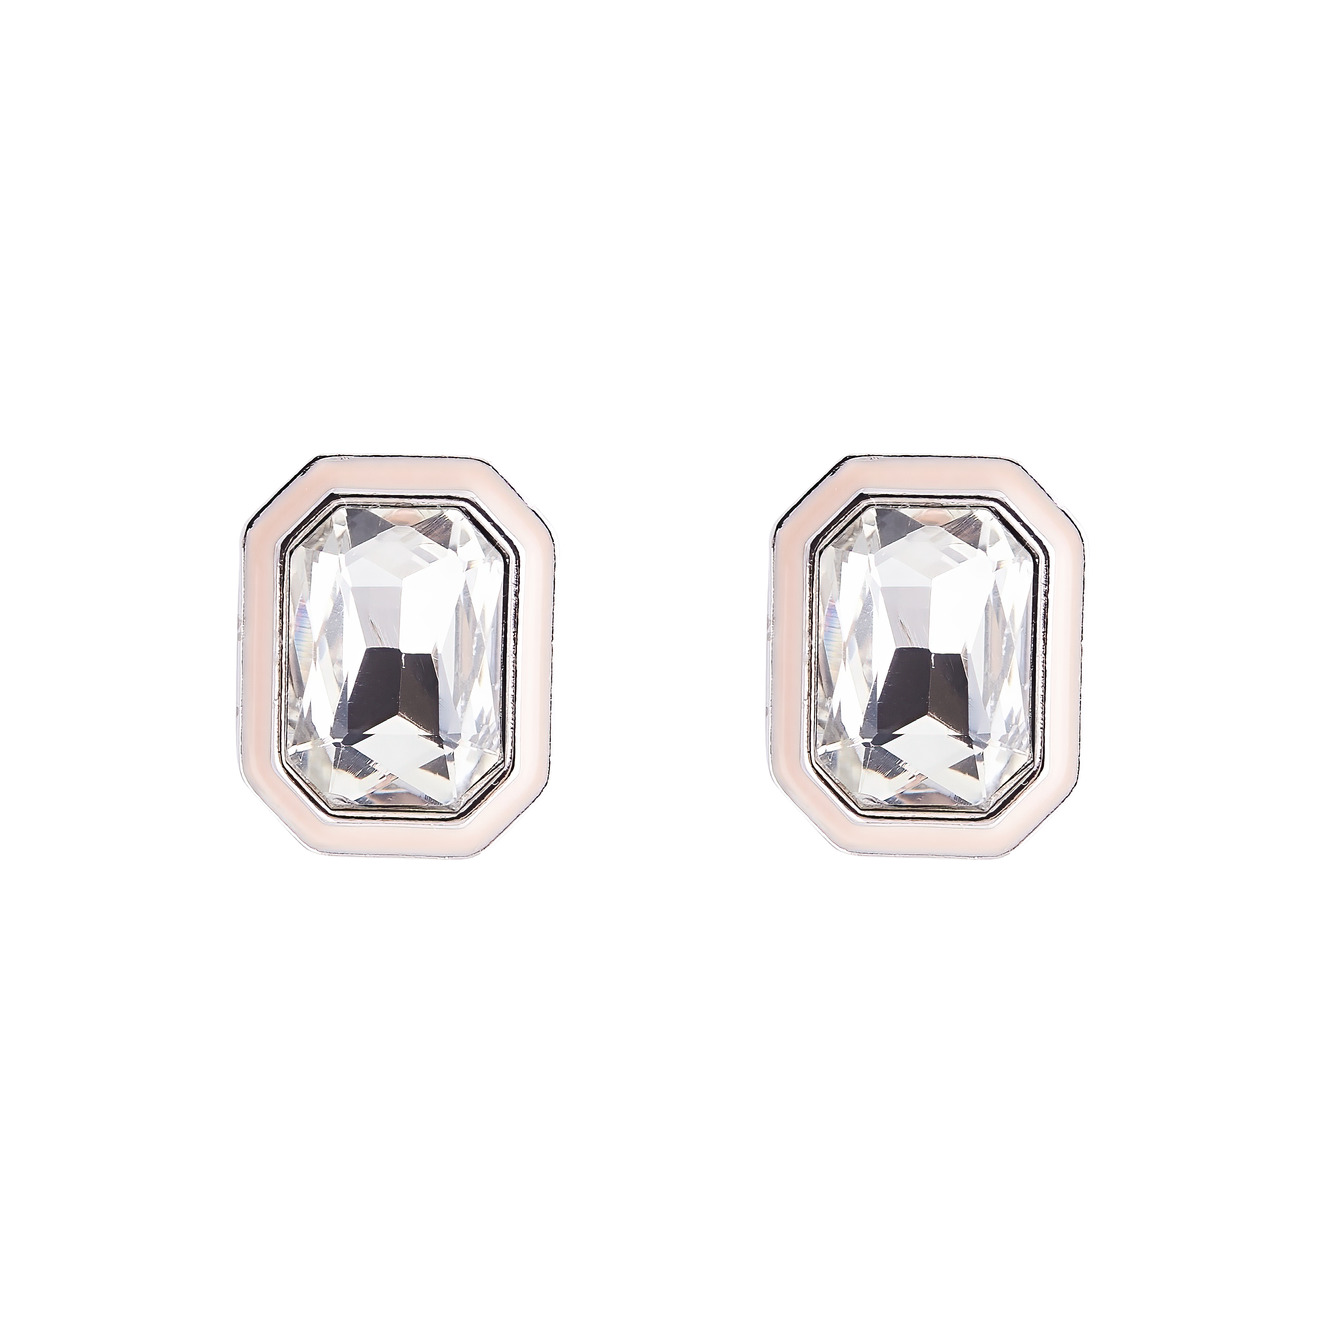 Herald Percy Серебристые серьги с белыми кристаллами и розовой эмалью herald percy серебристые серьги с белыми кристаллами и розовой эмалью